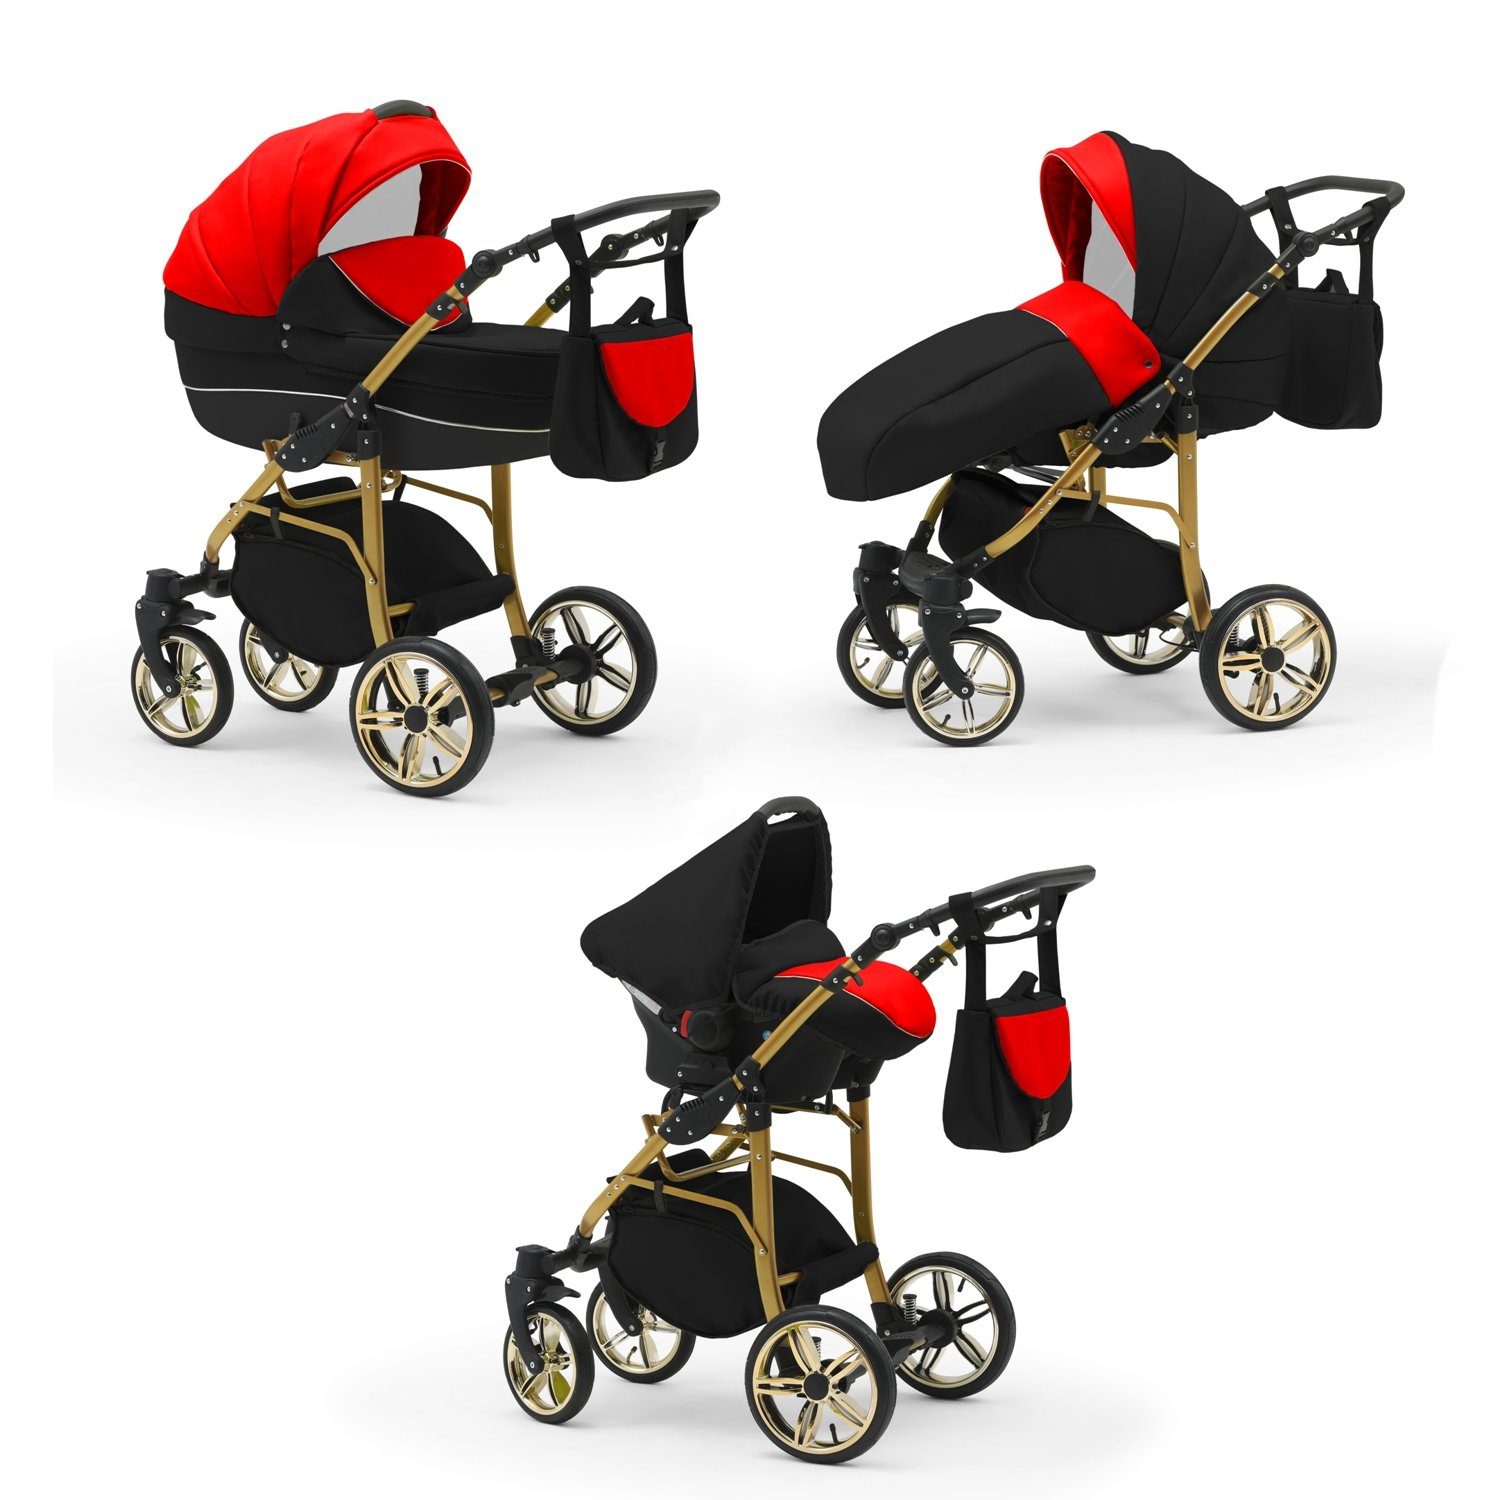 Kinderwagen-Set 3 Gold- 46 Cosmo Farben 16 in babies-on-wheels - Teile 1 Kombi-Kinderwagen in Rot-Schwarz